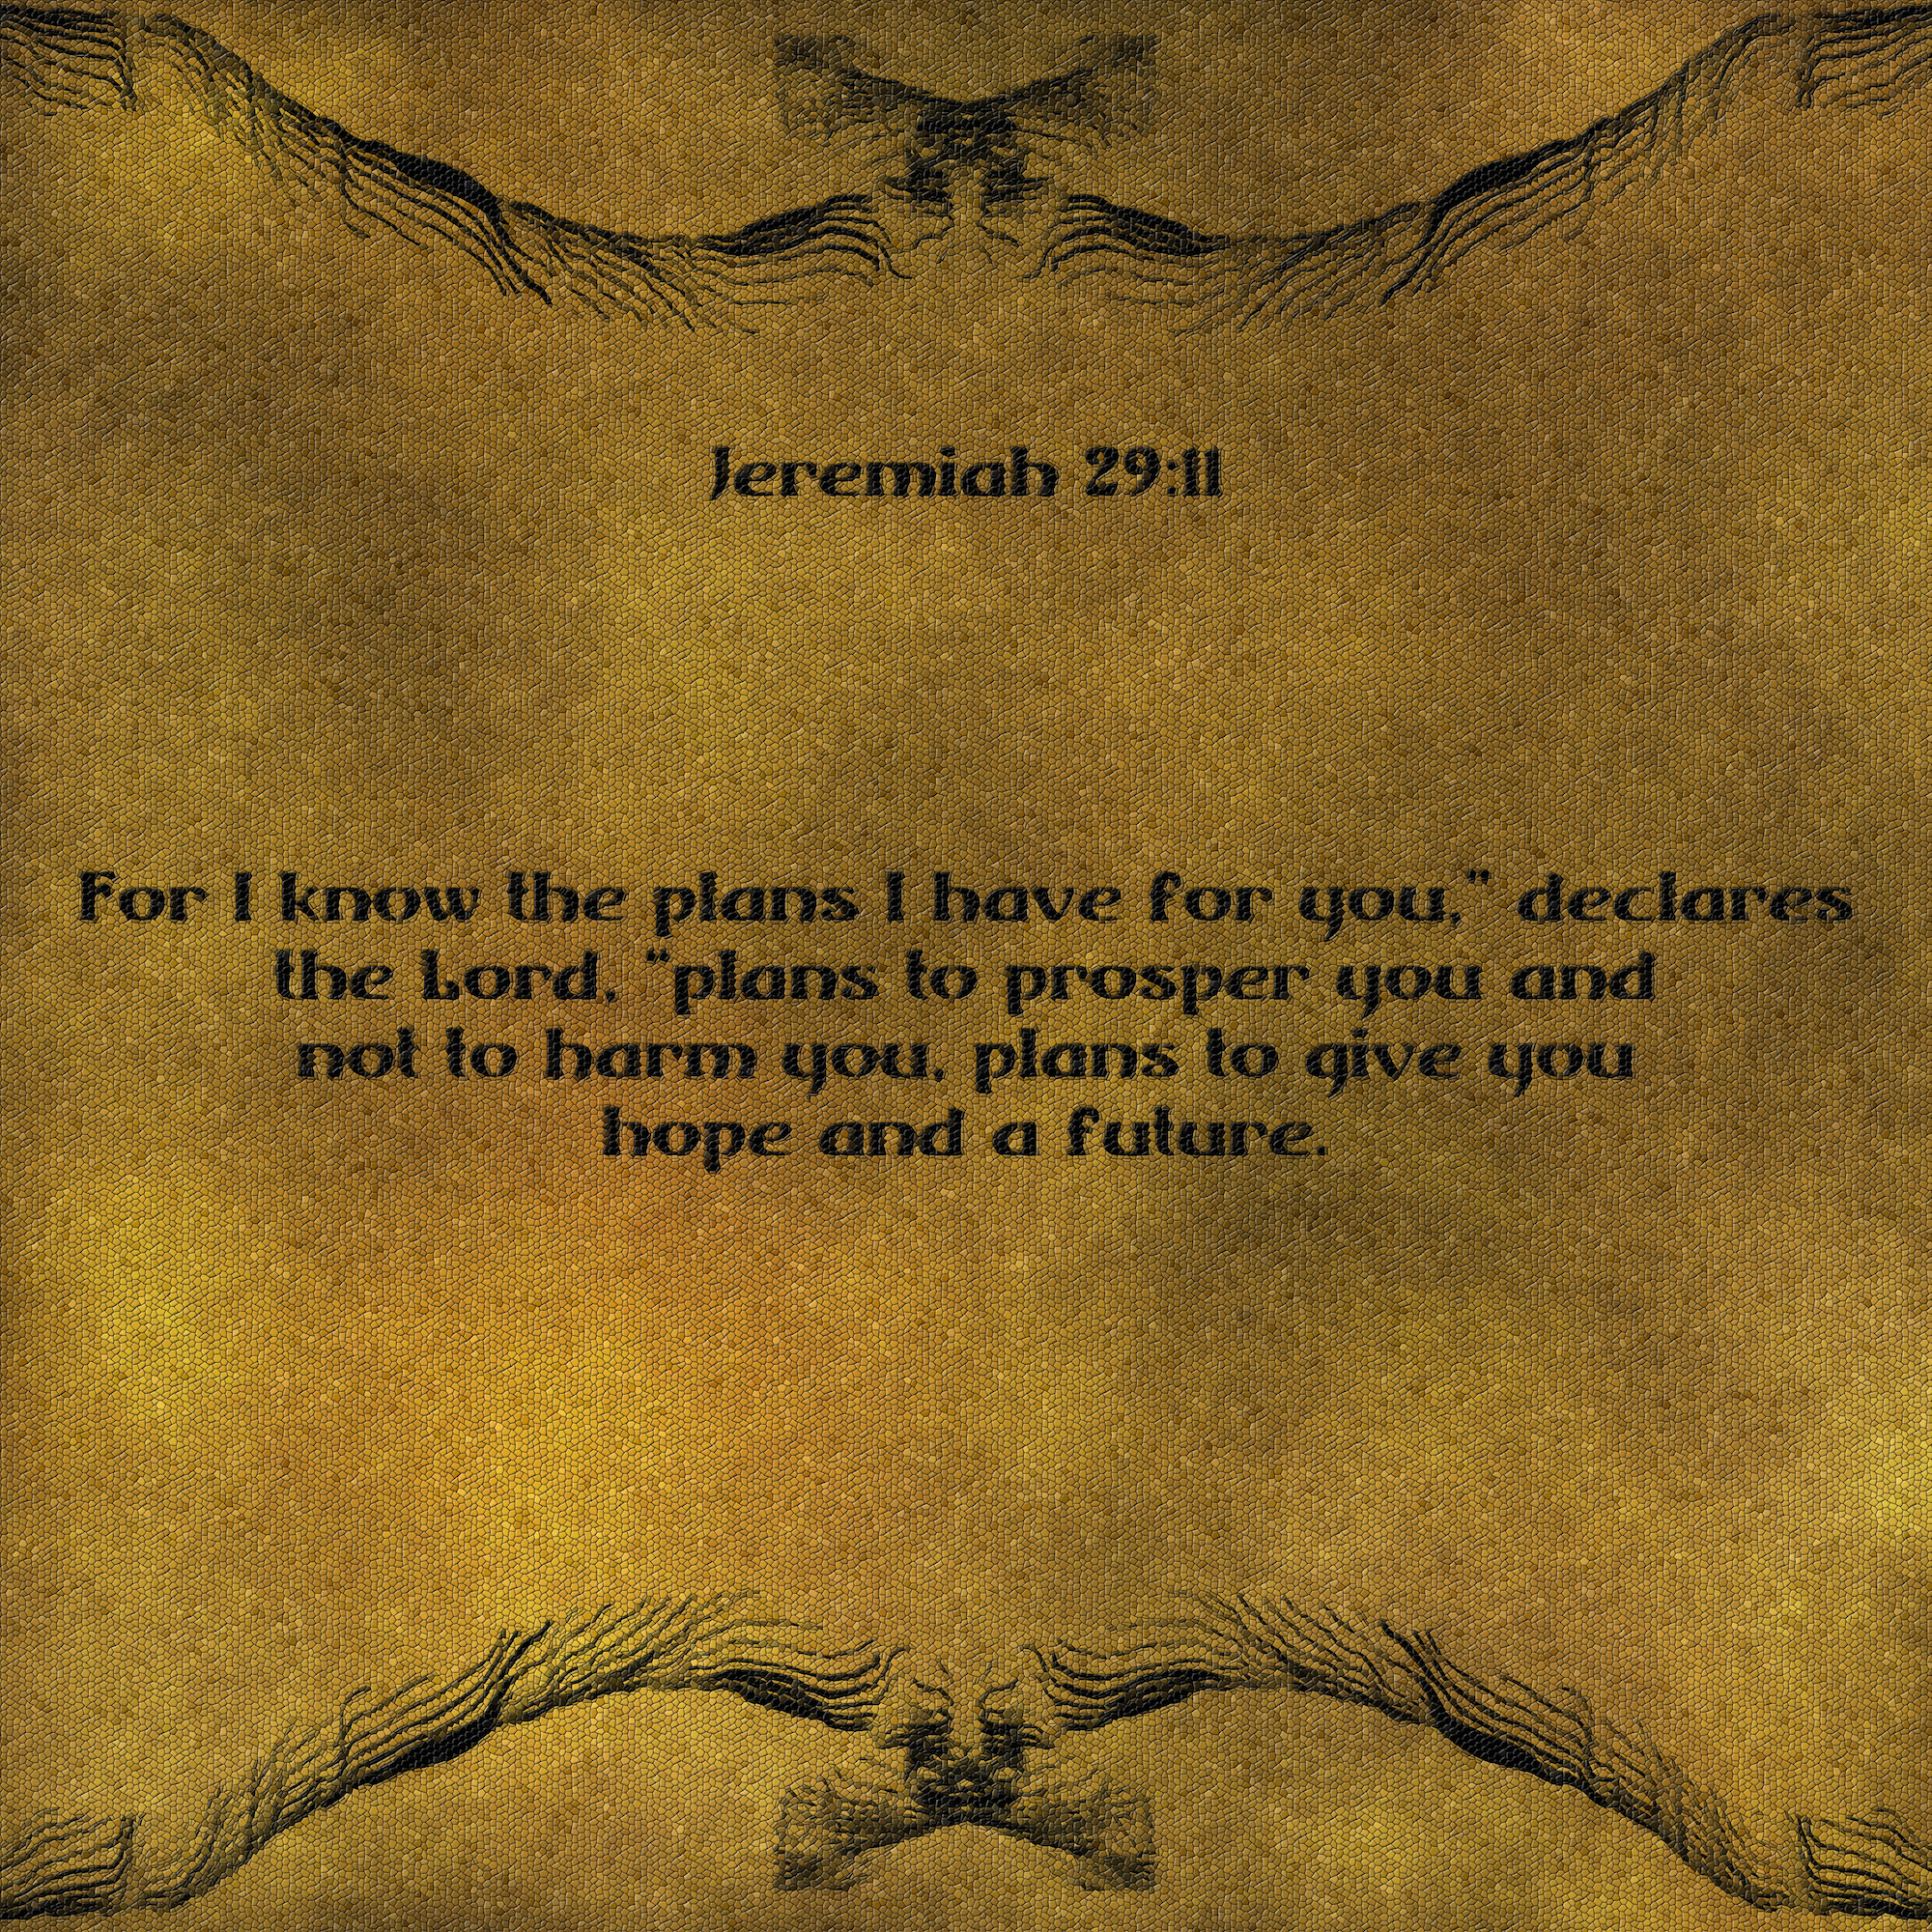 Mosaic Digital Art Jeremiah 29:11, Bible, Catholic, Christian, Pray, HQ Photo